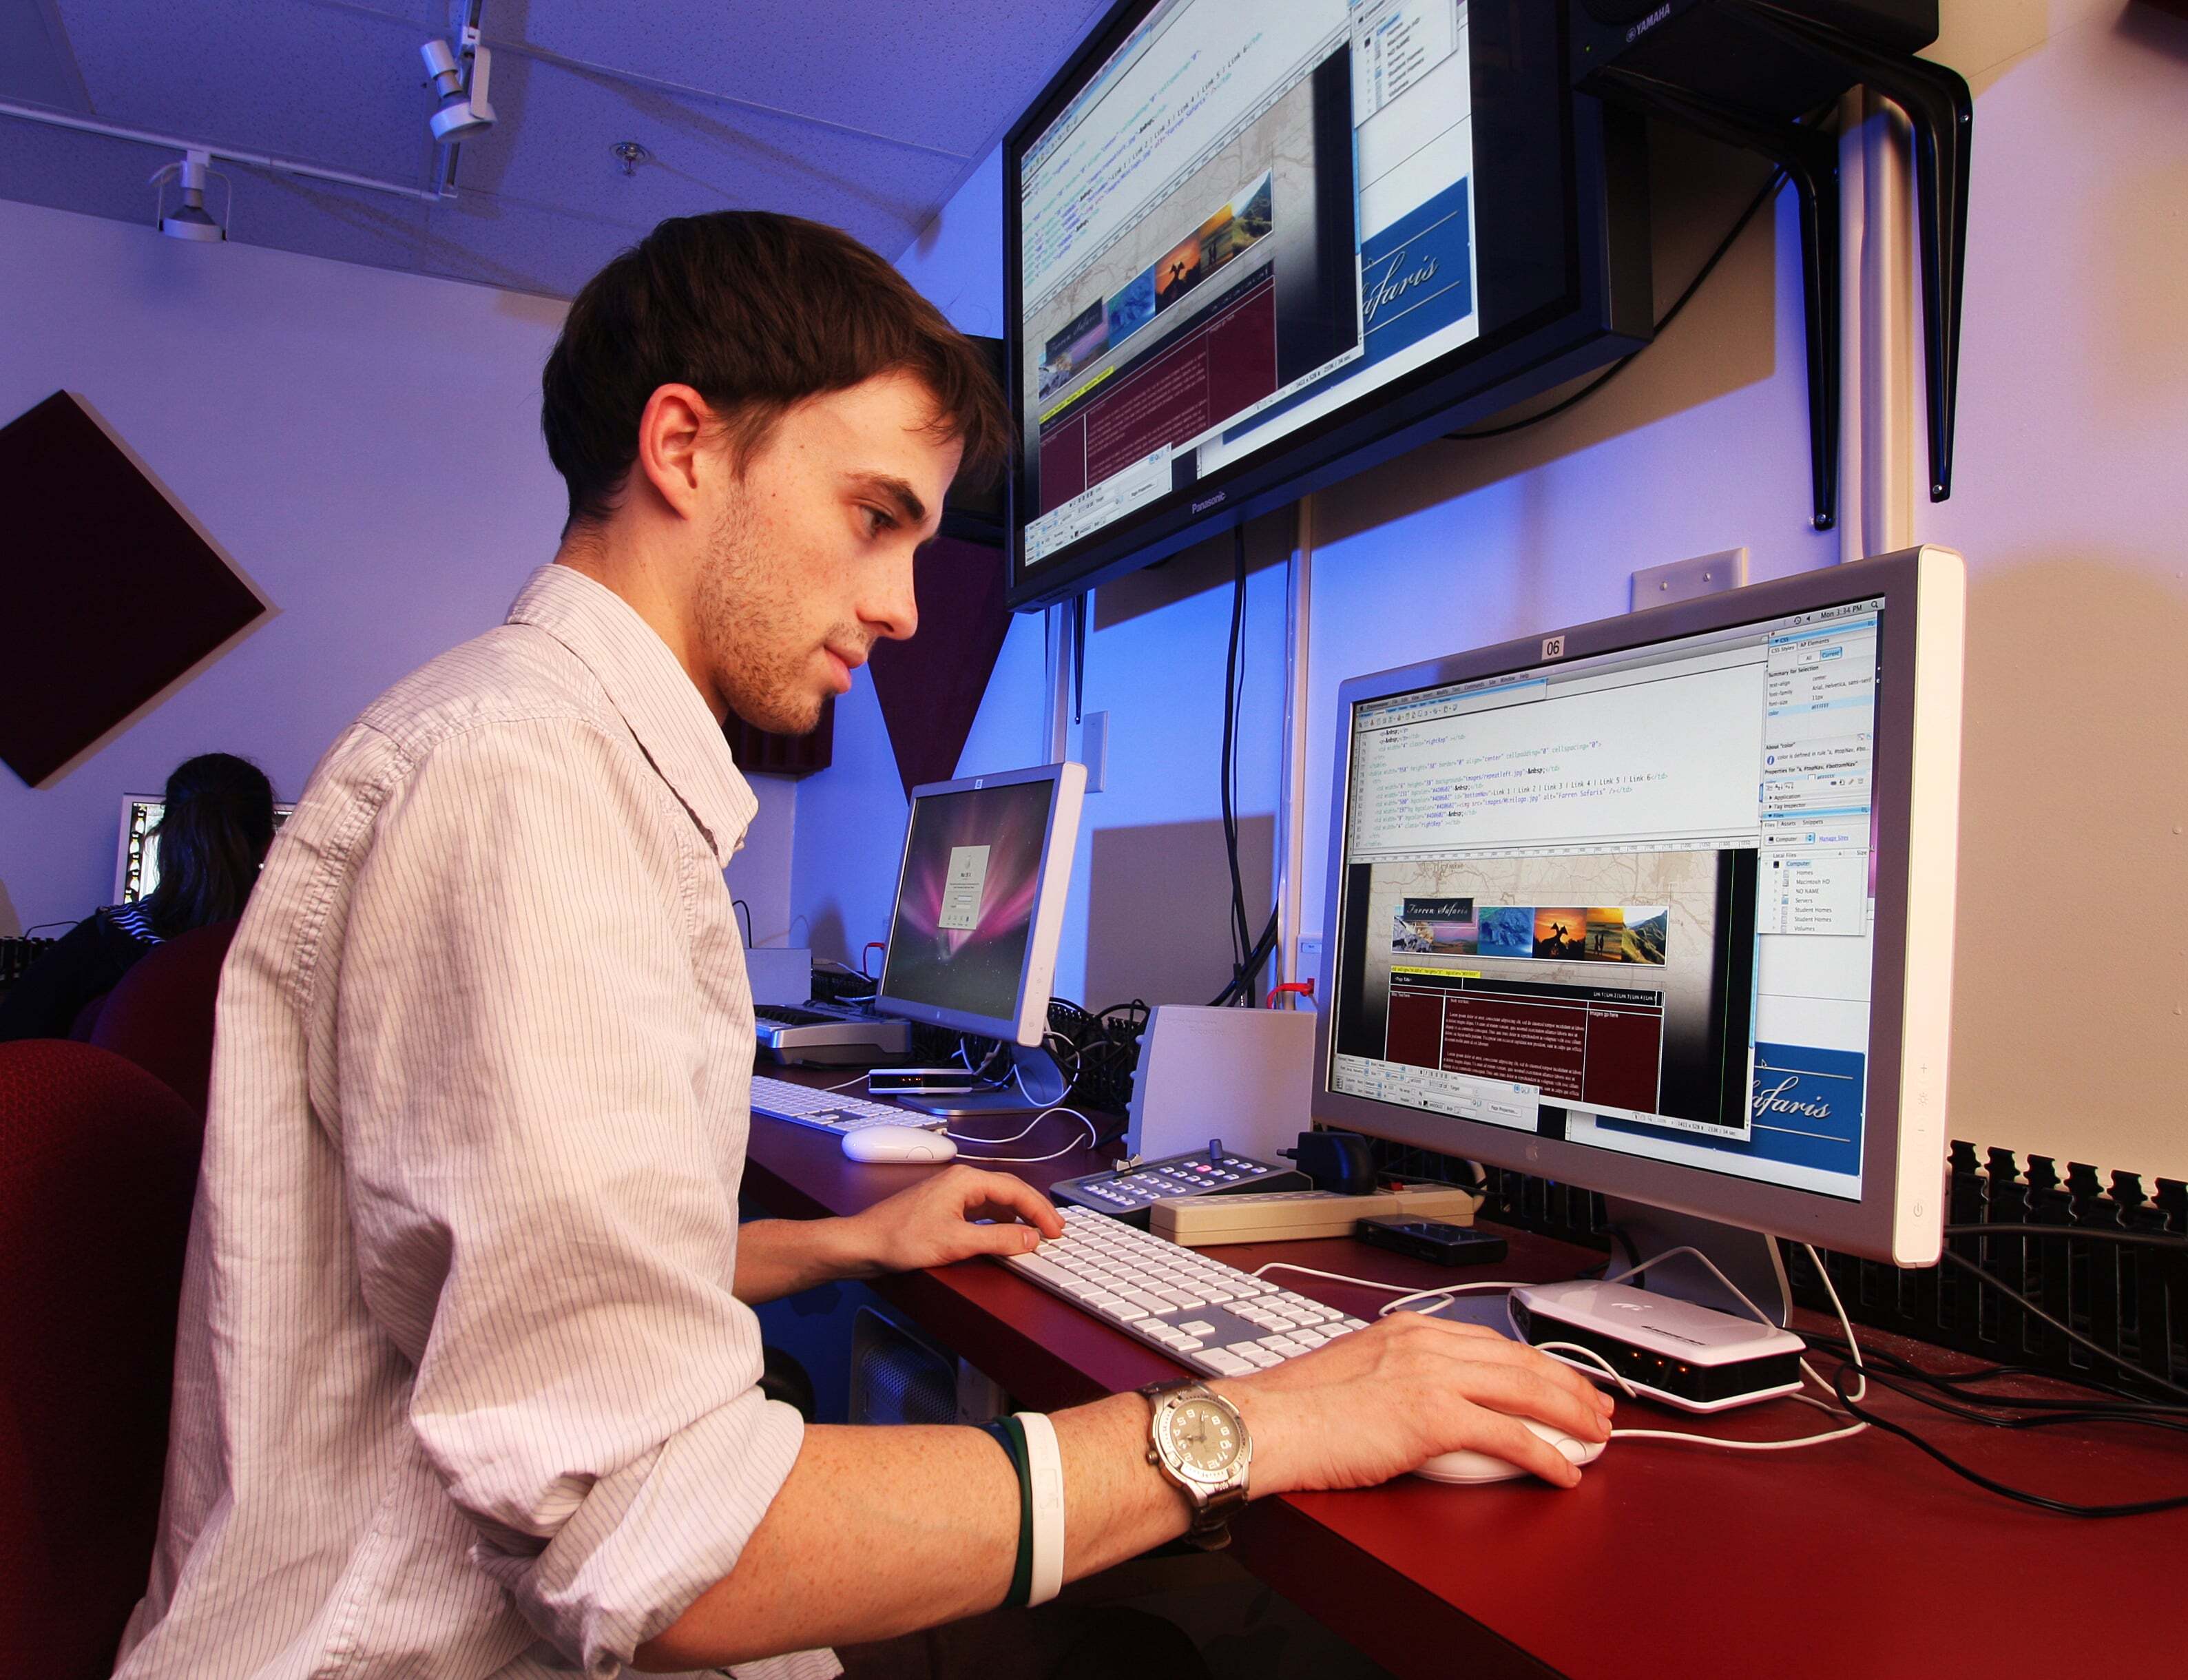 a student works at a desktop computer